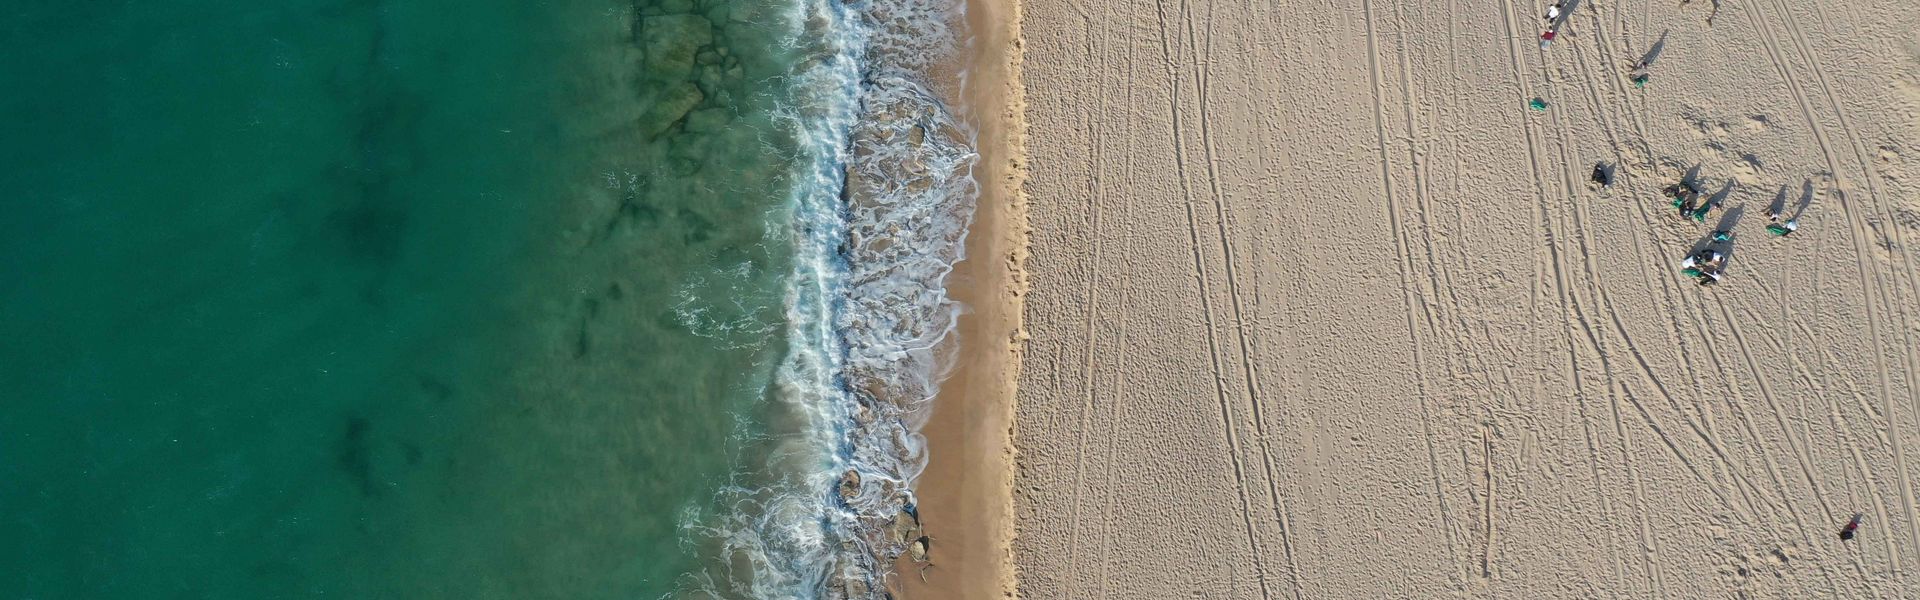 Ashdod Beach in Israel.